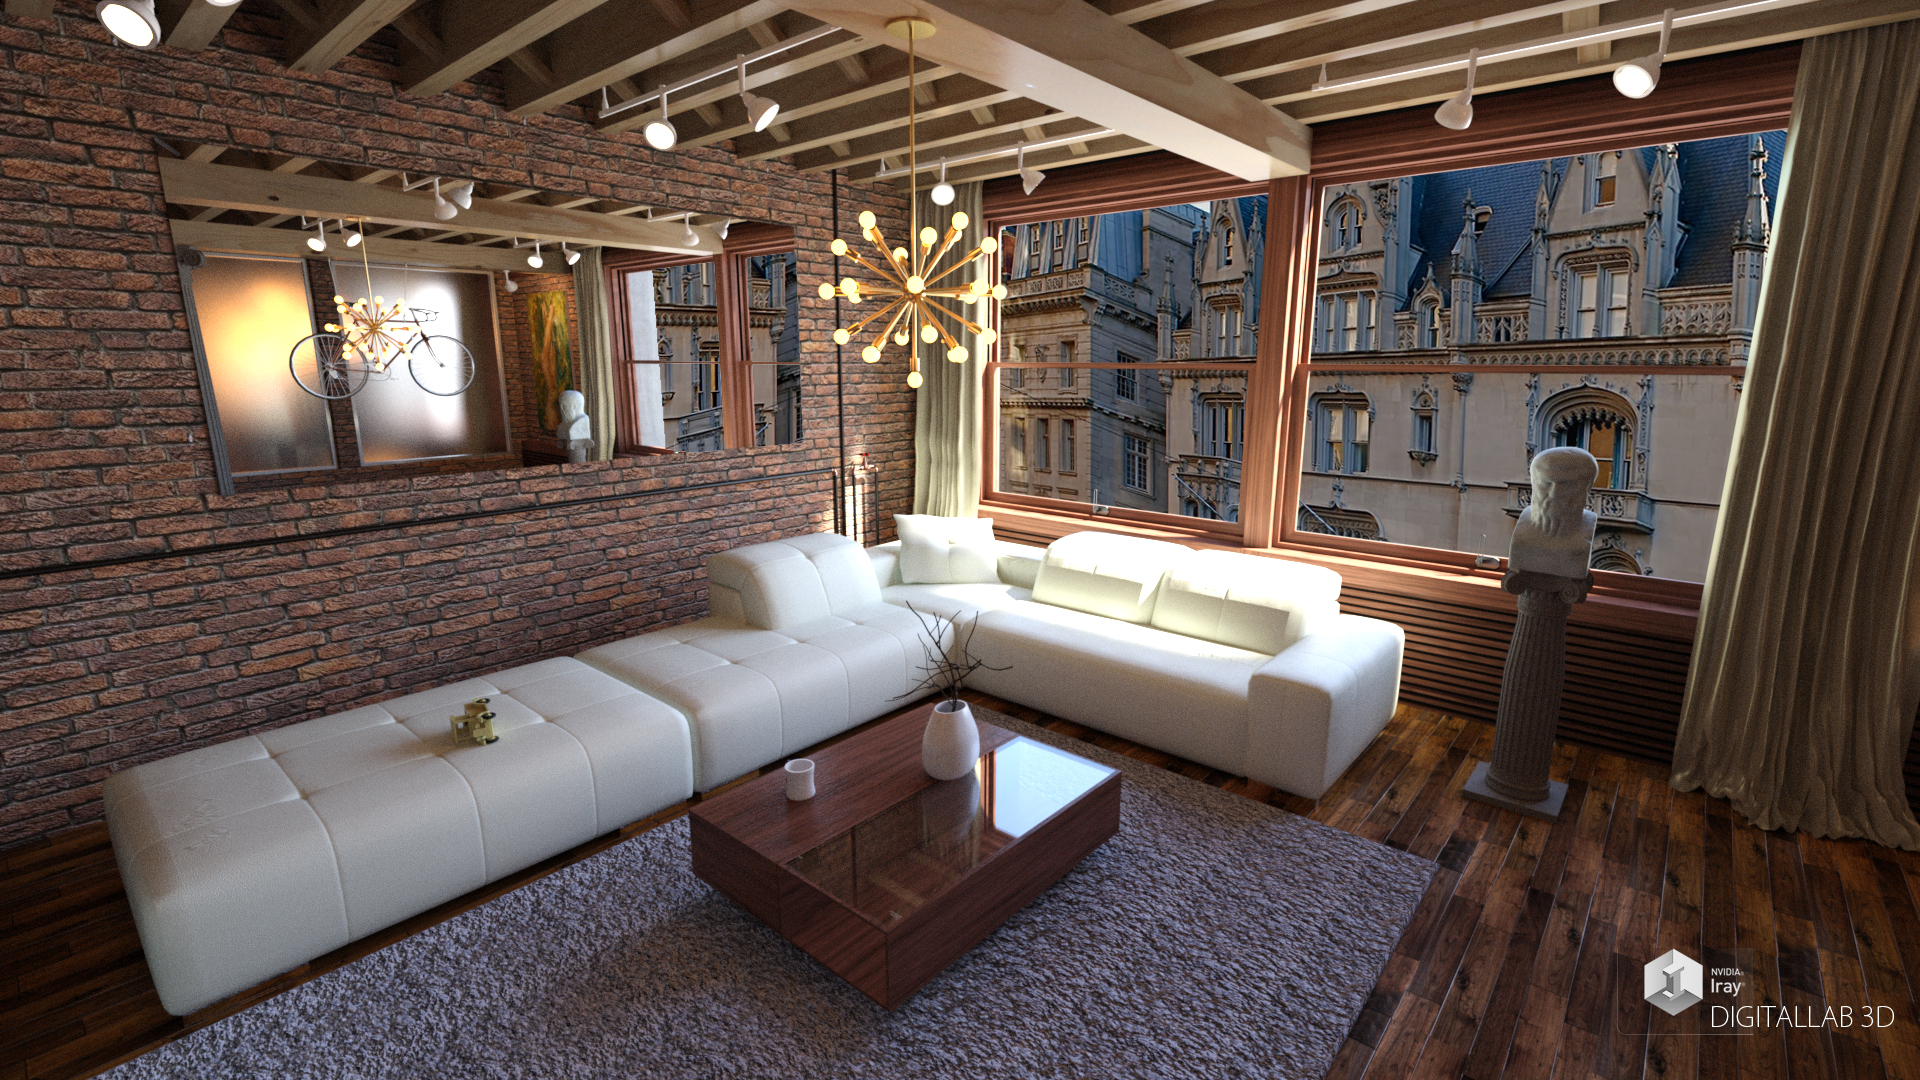 NY Living Room by: Digitallab3D, 3D Models by Daz 3D